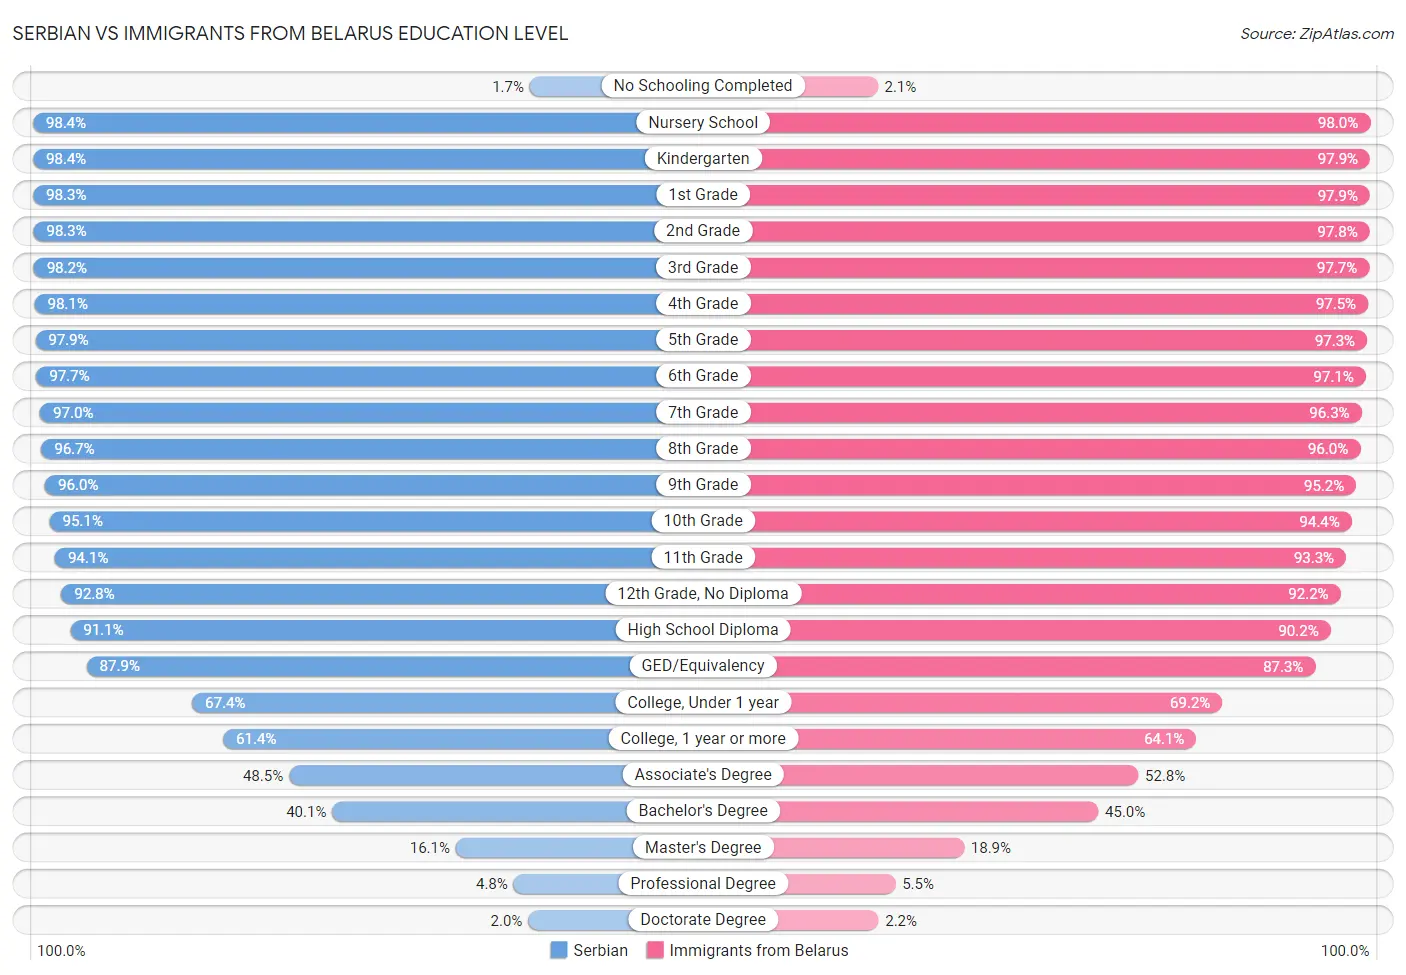 Serbian vs Immigrants from Belarus Education Level